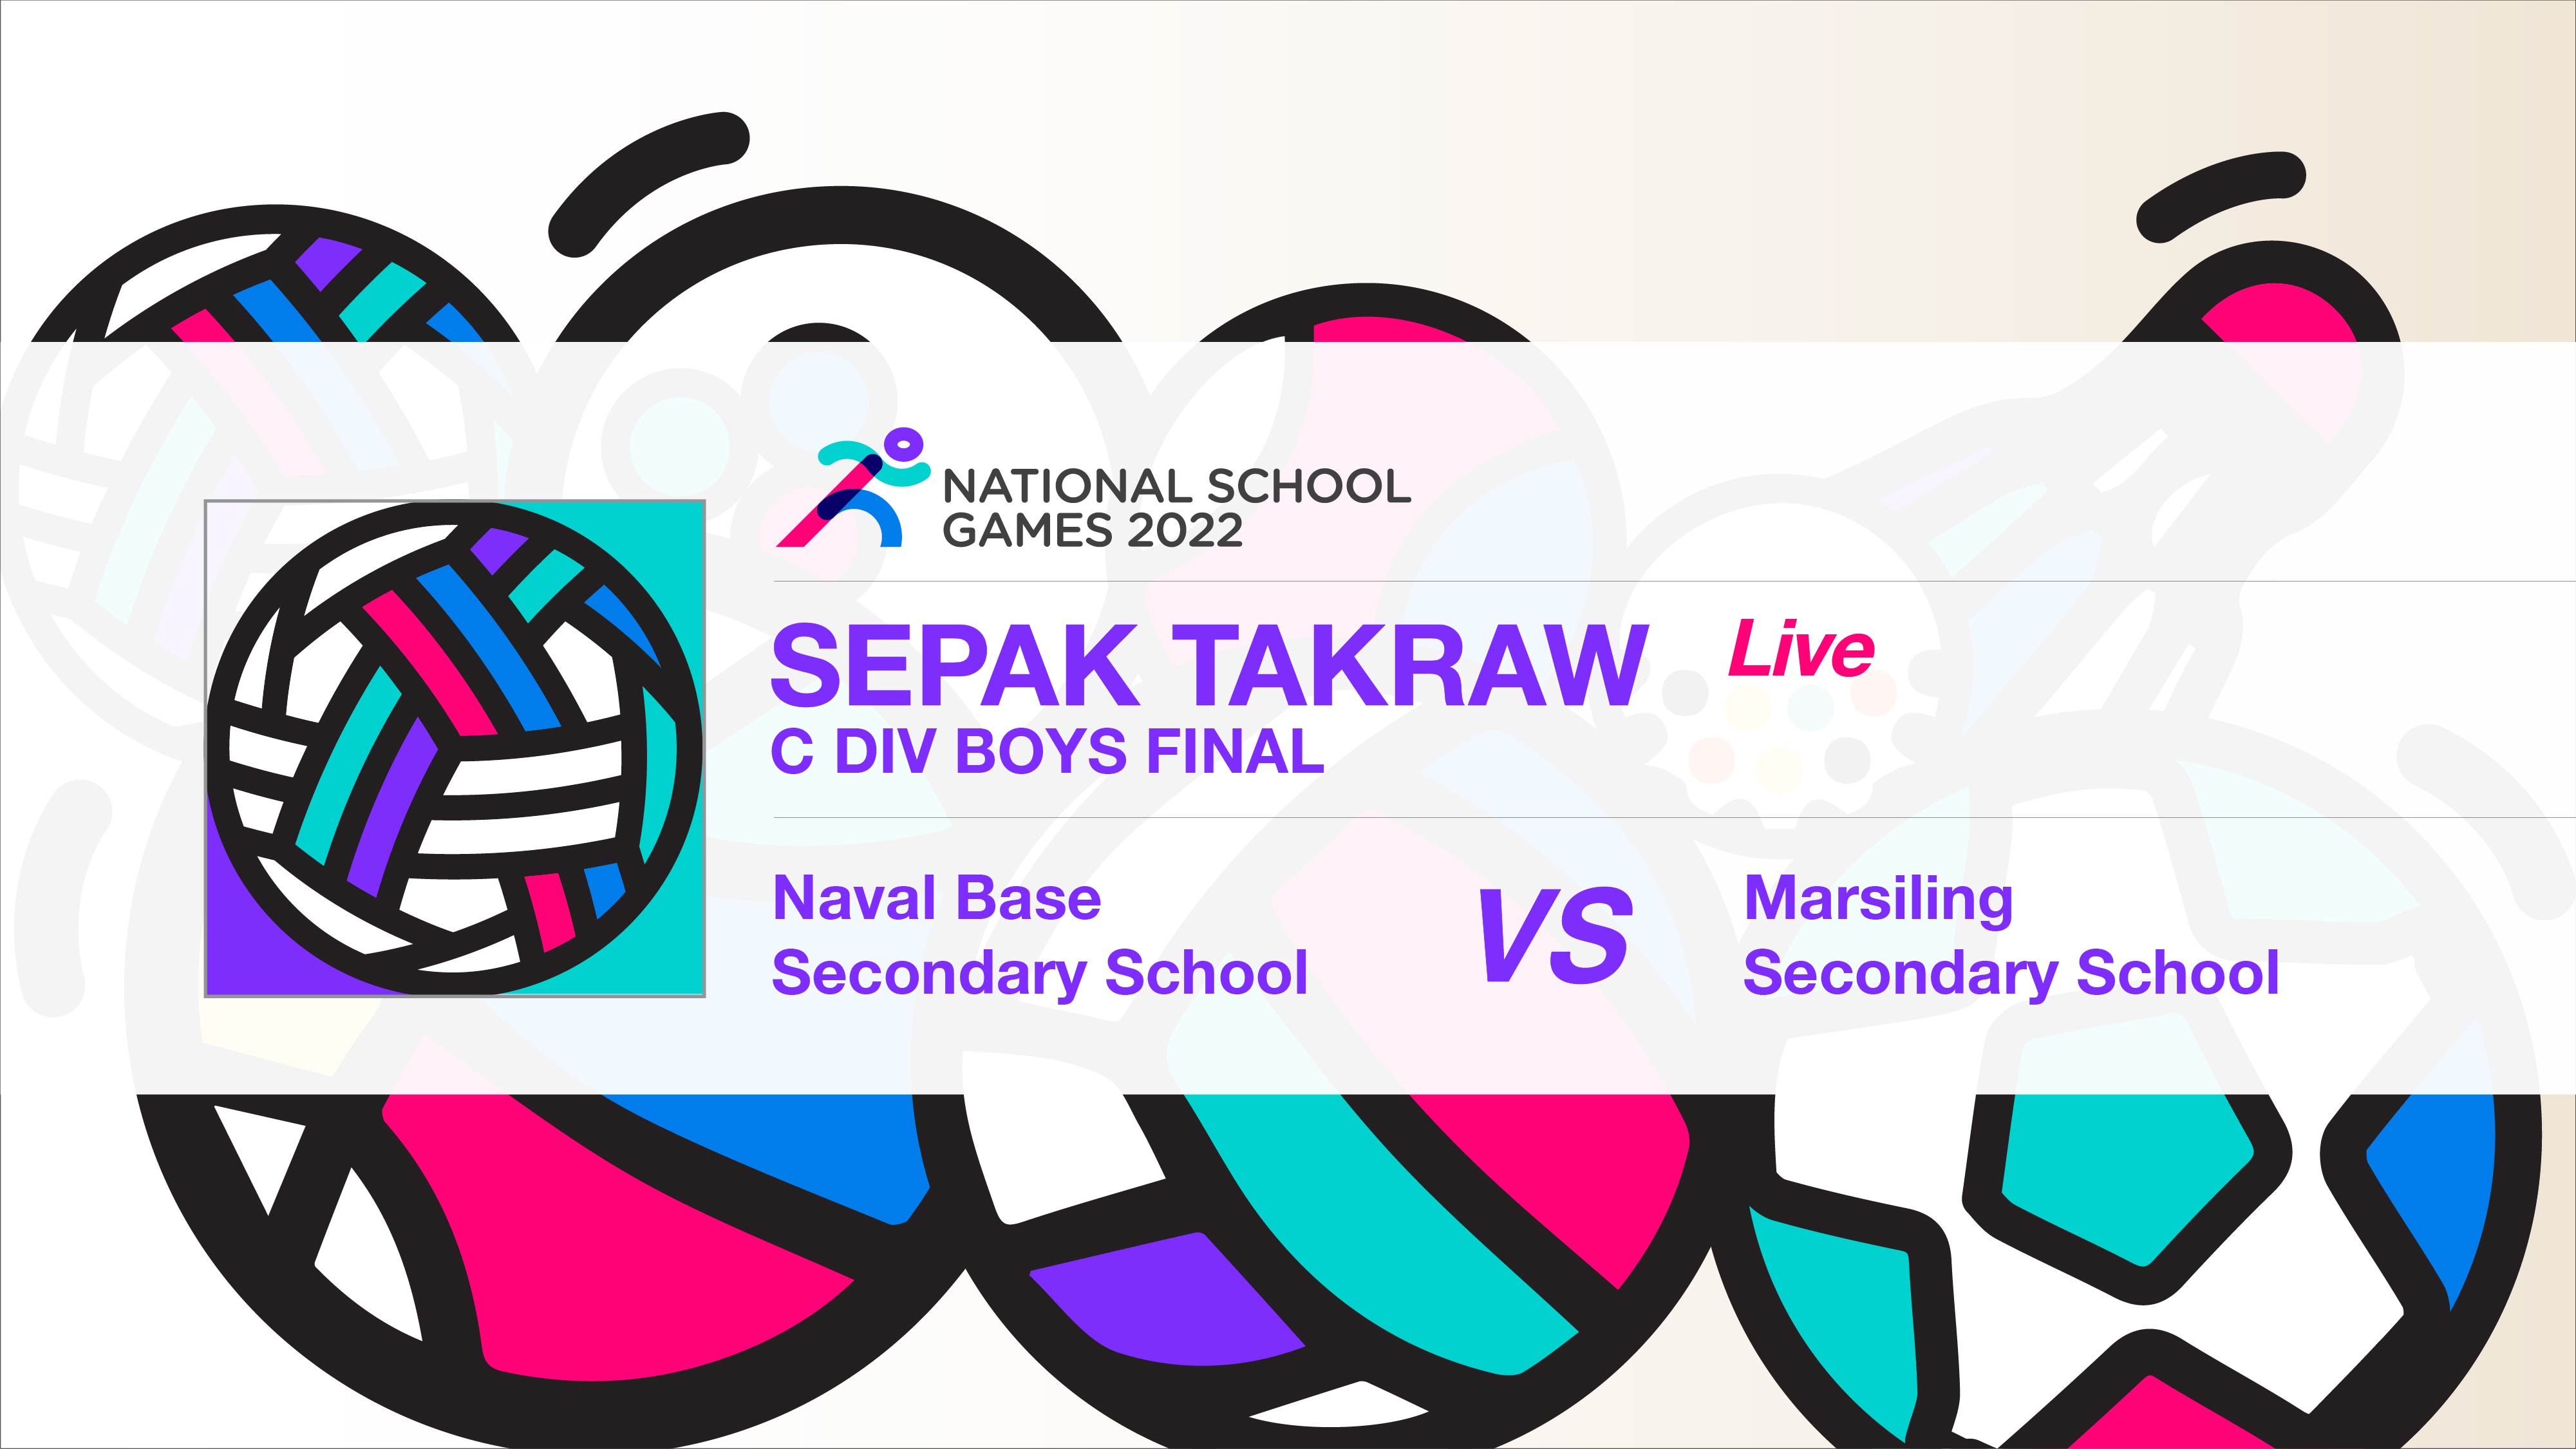 SSSC Sepak Takraw National C Division Boys Final | Naval Base Secondary School vs Marsiling Secondary School